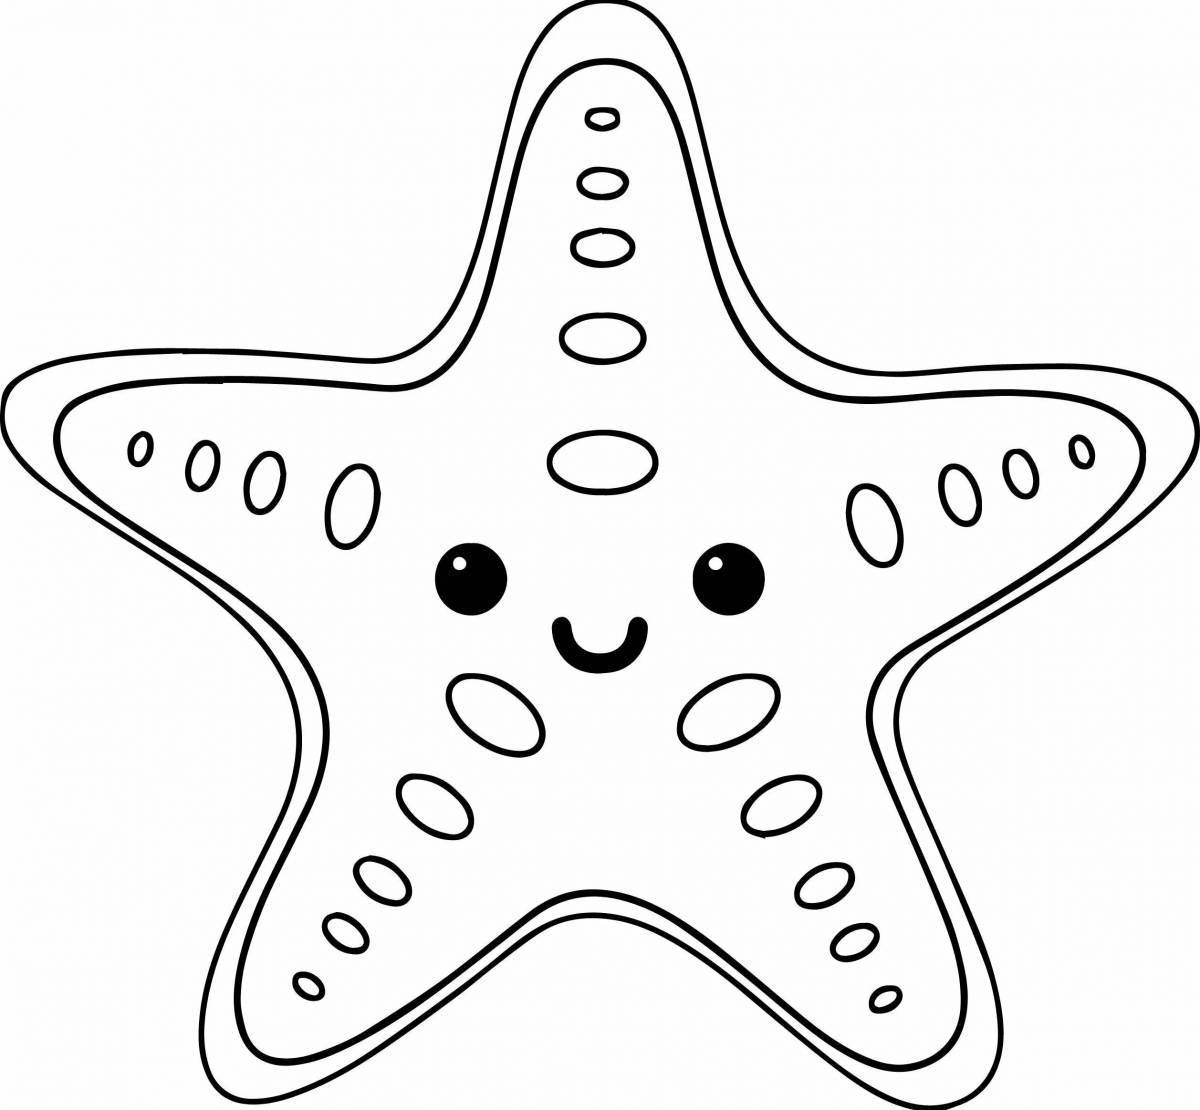 Joyful starfish coloring book for kids